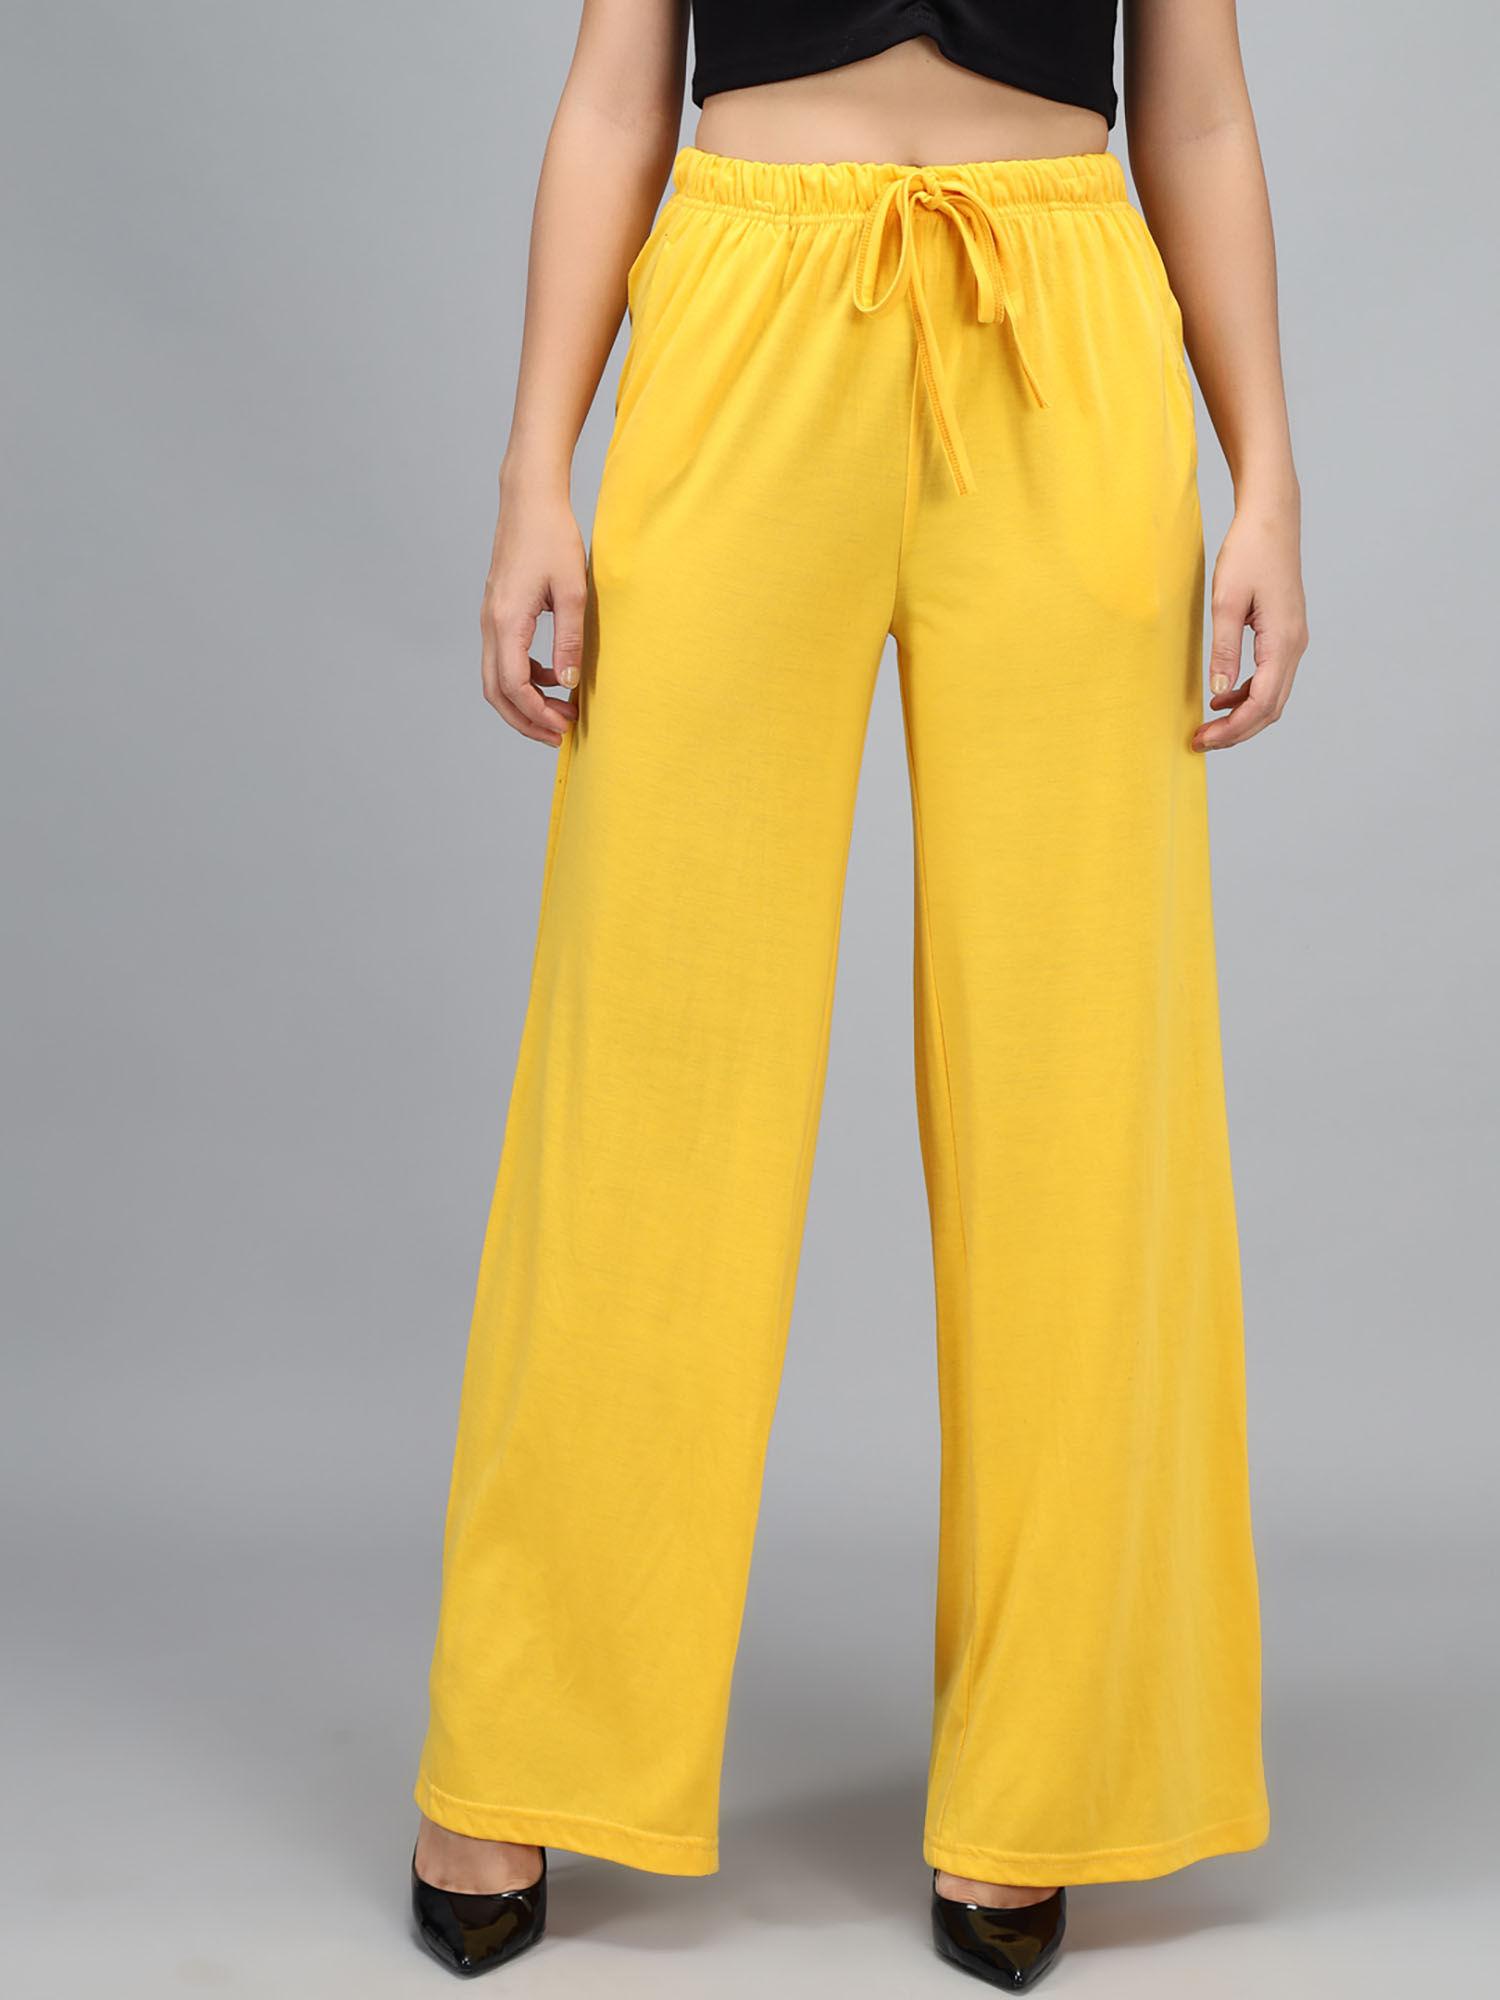 women's high rise poly lycra yellow trouser